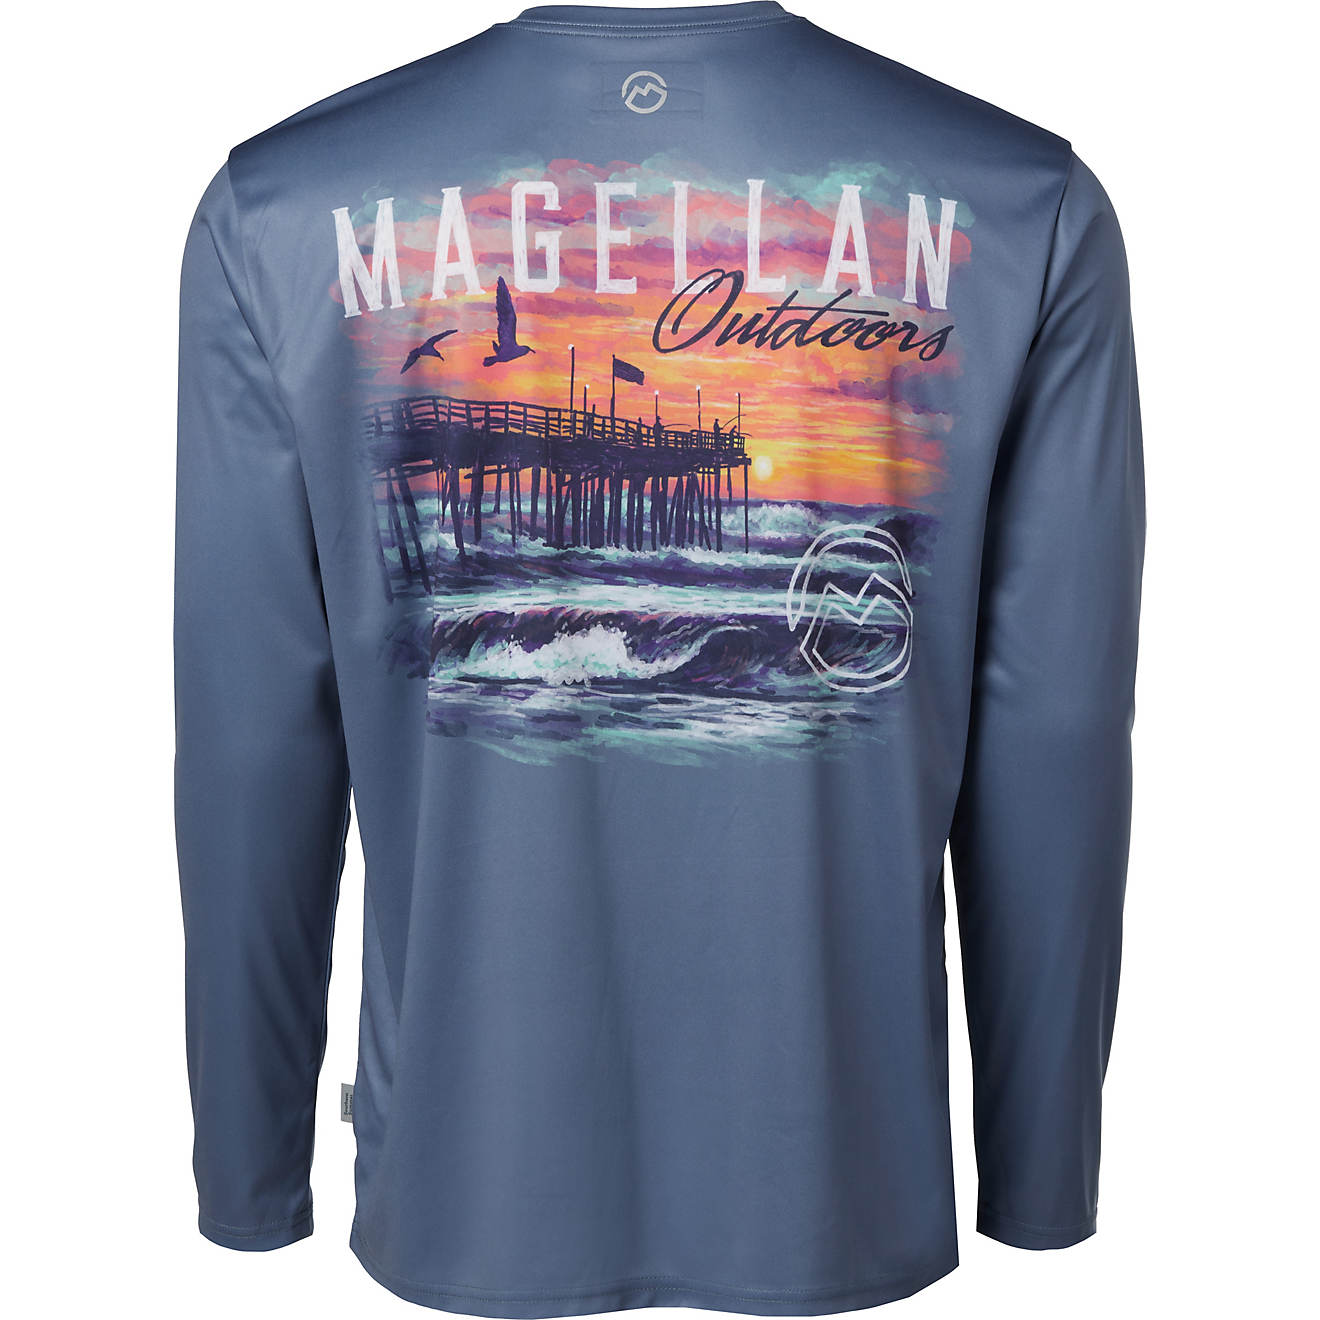 Magellan Outdoors Men's FishGear Southern Summer Graphic Long